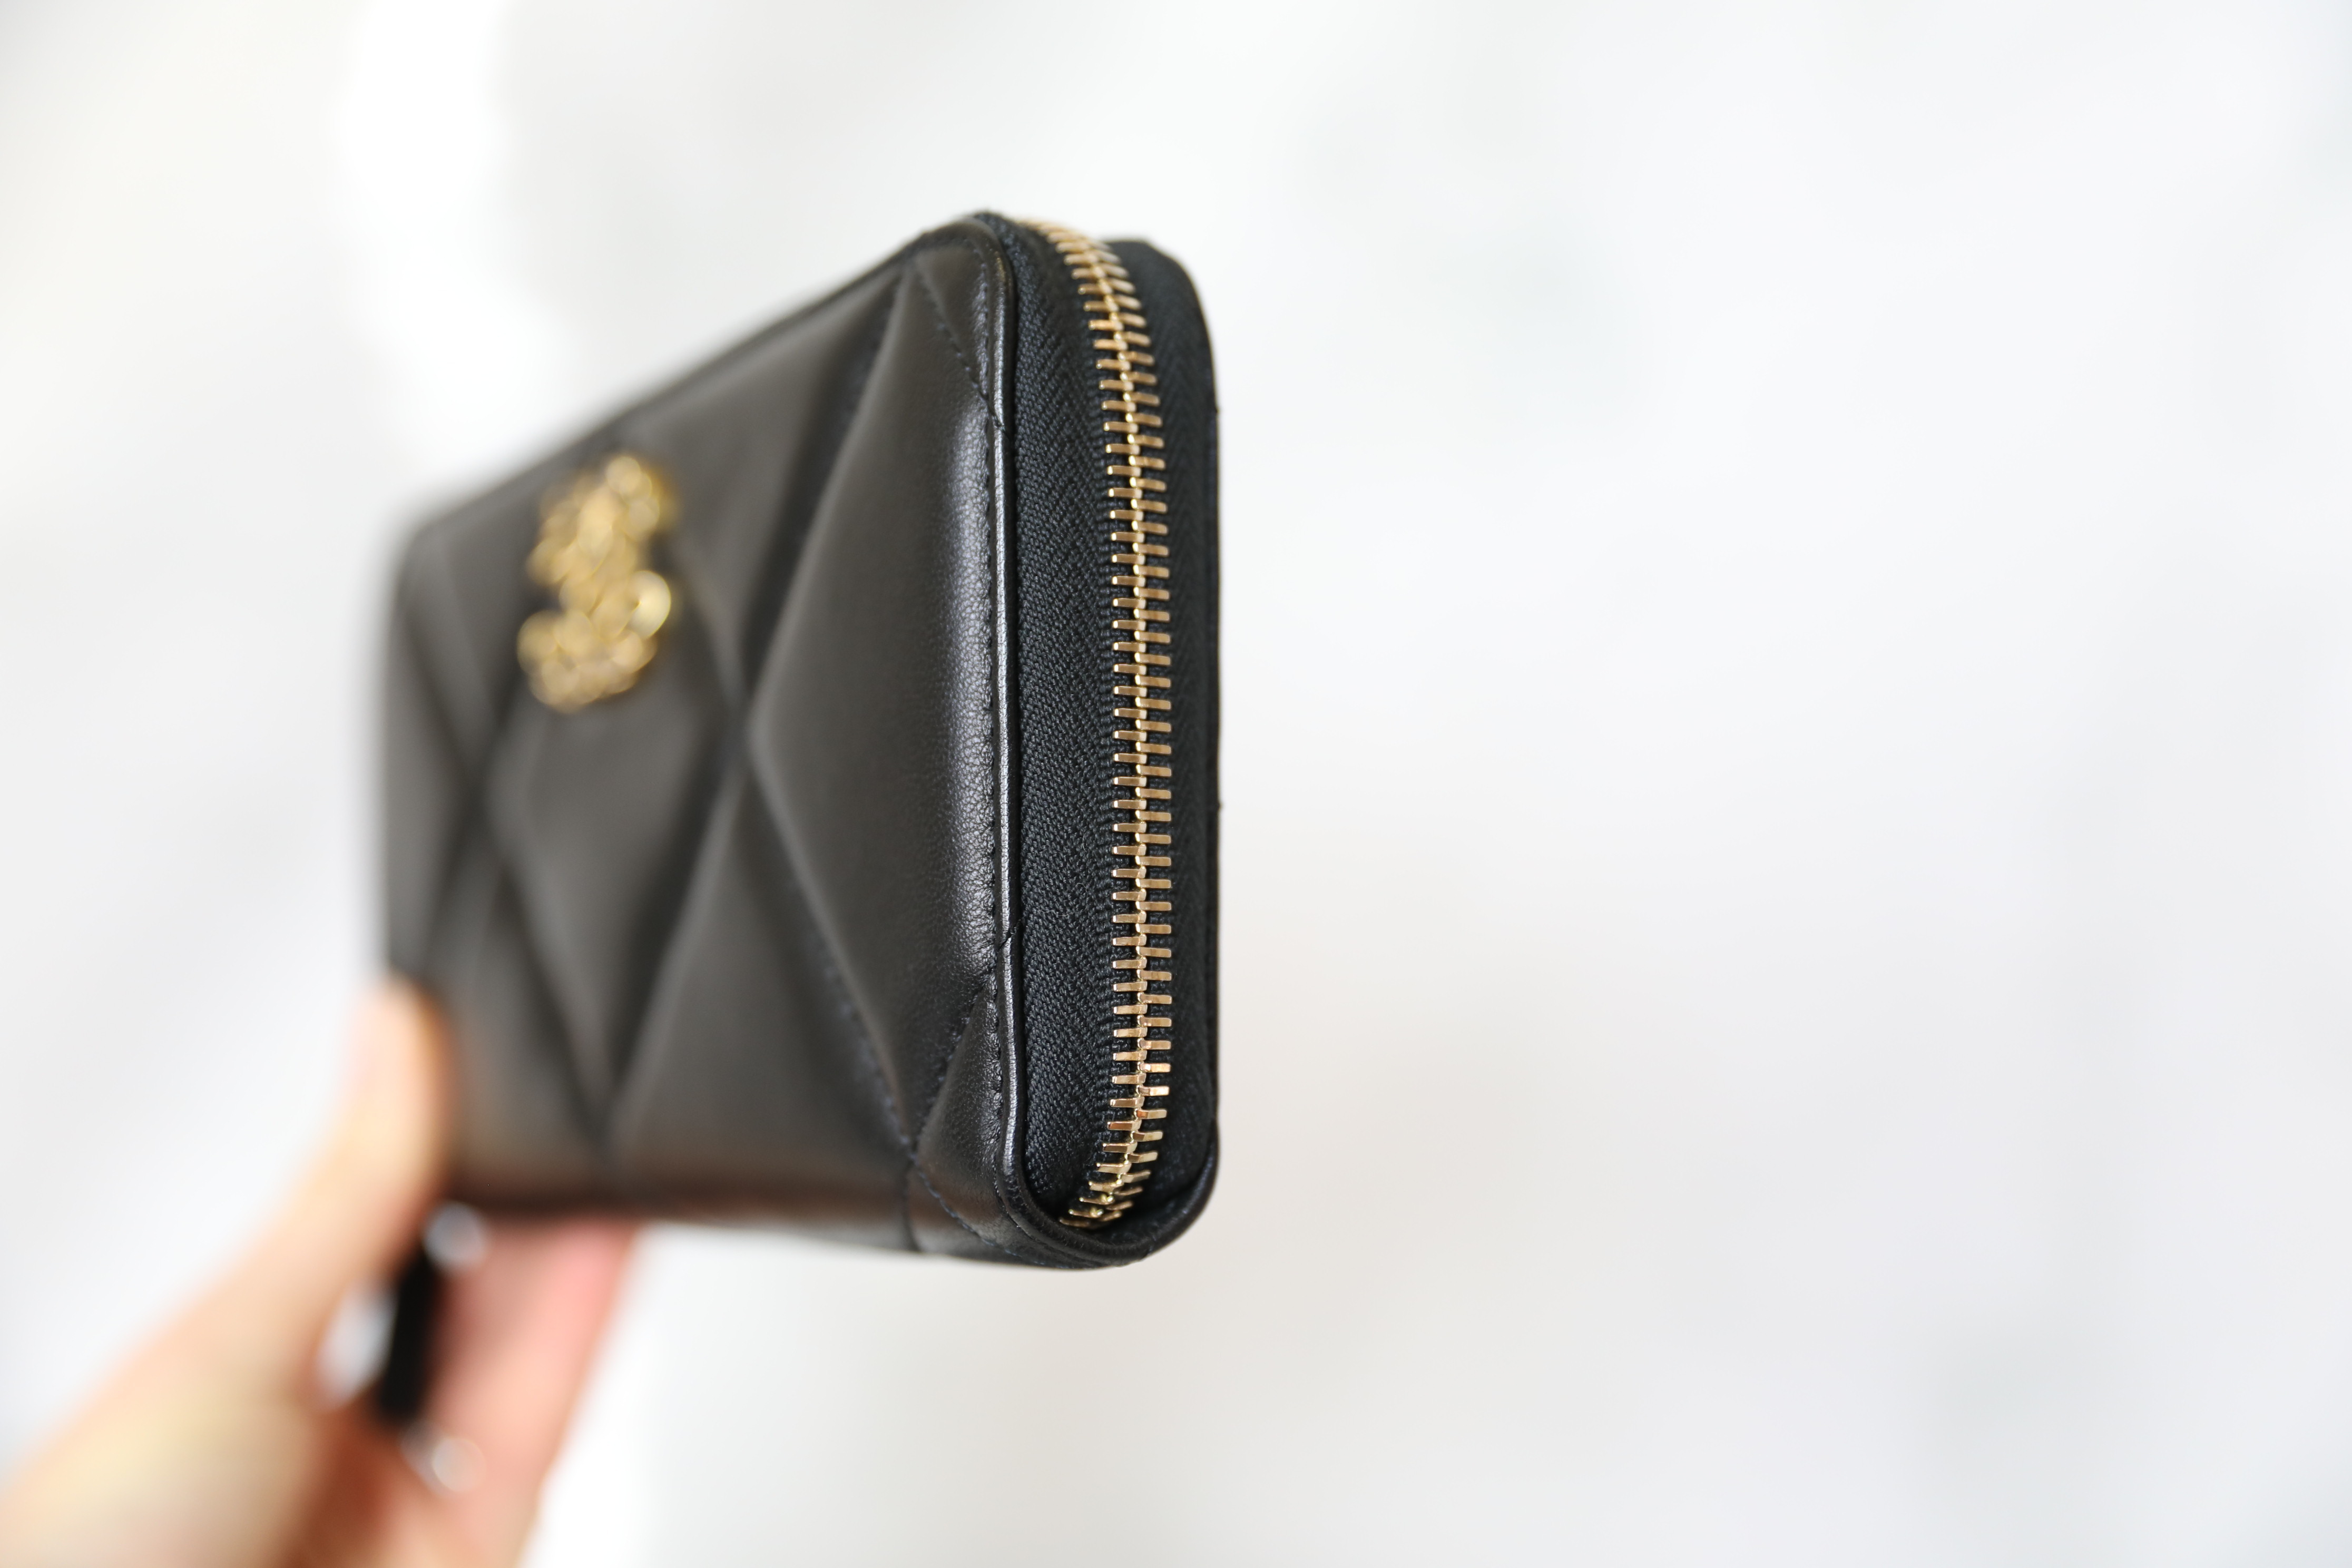 Chanelwallets Chanel 19c leather medium zip wallet 